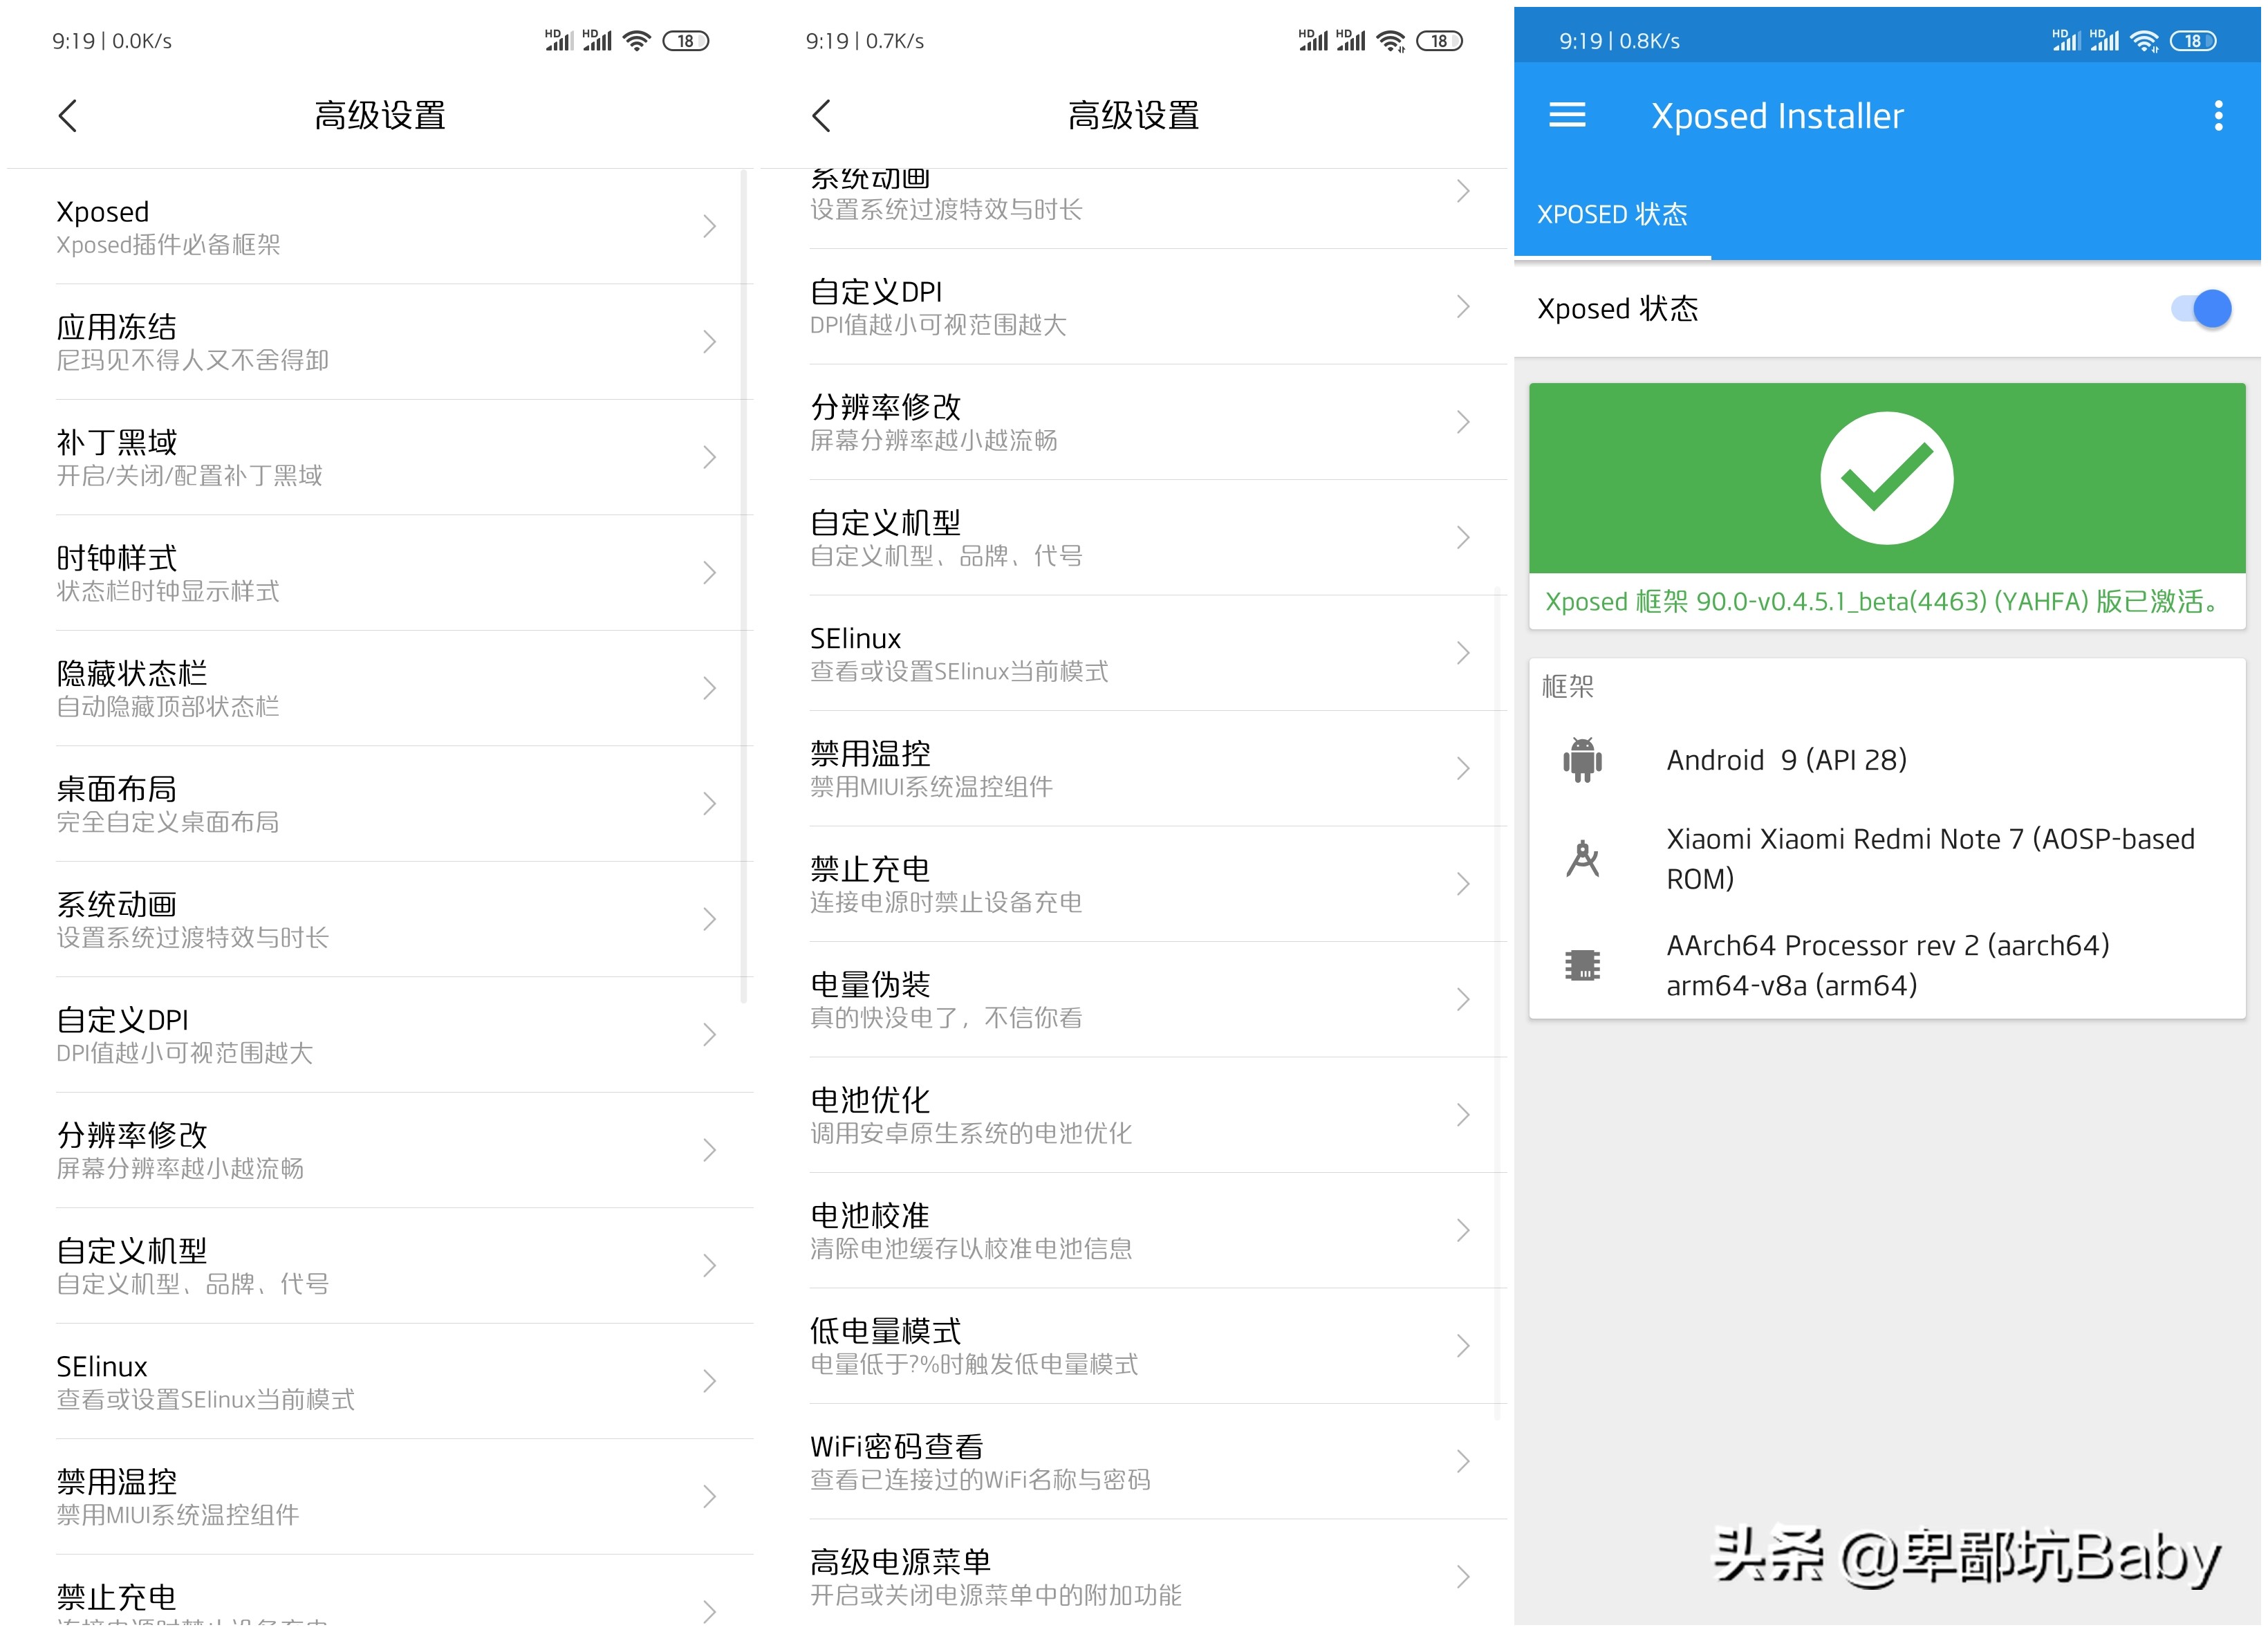 MIUI10 9.9.6中国开发版 猪脚婆姐｜XP|高級作用｜Magisk|急速顺畅